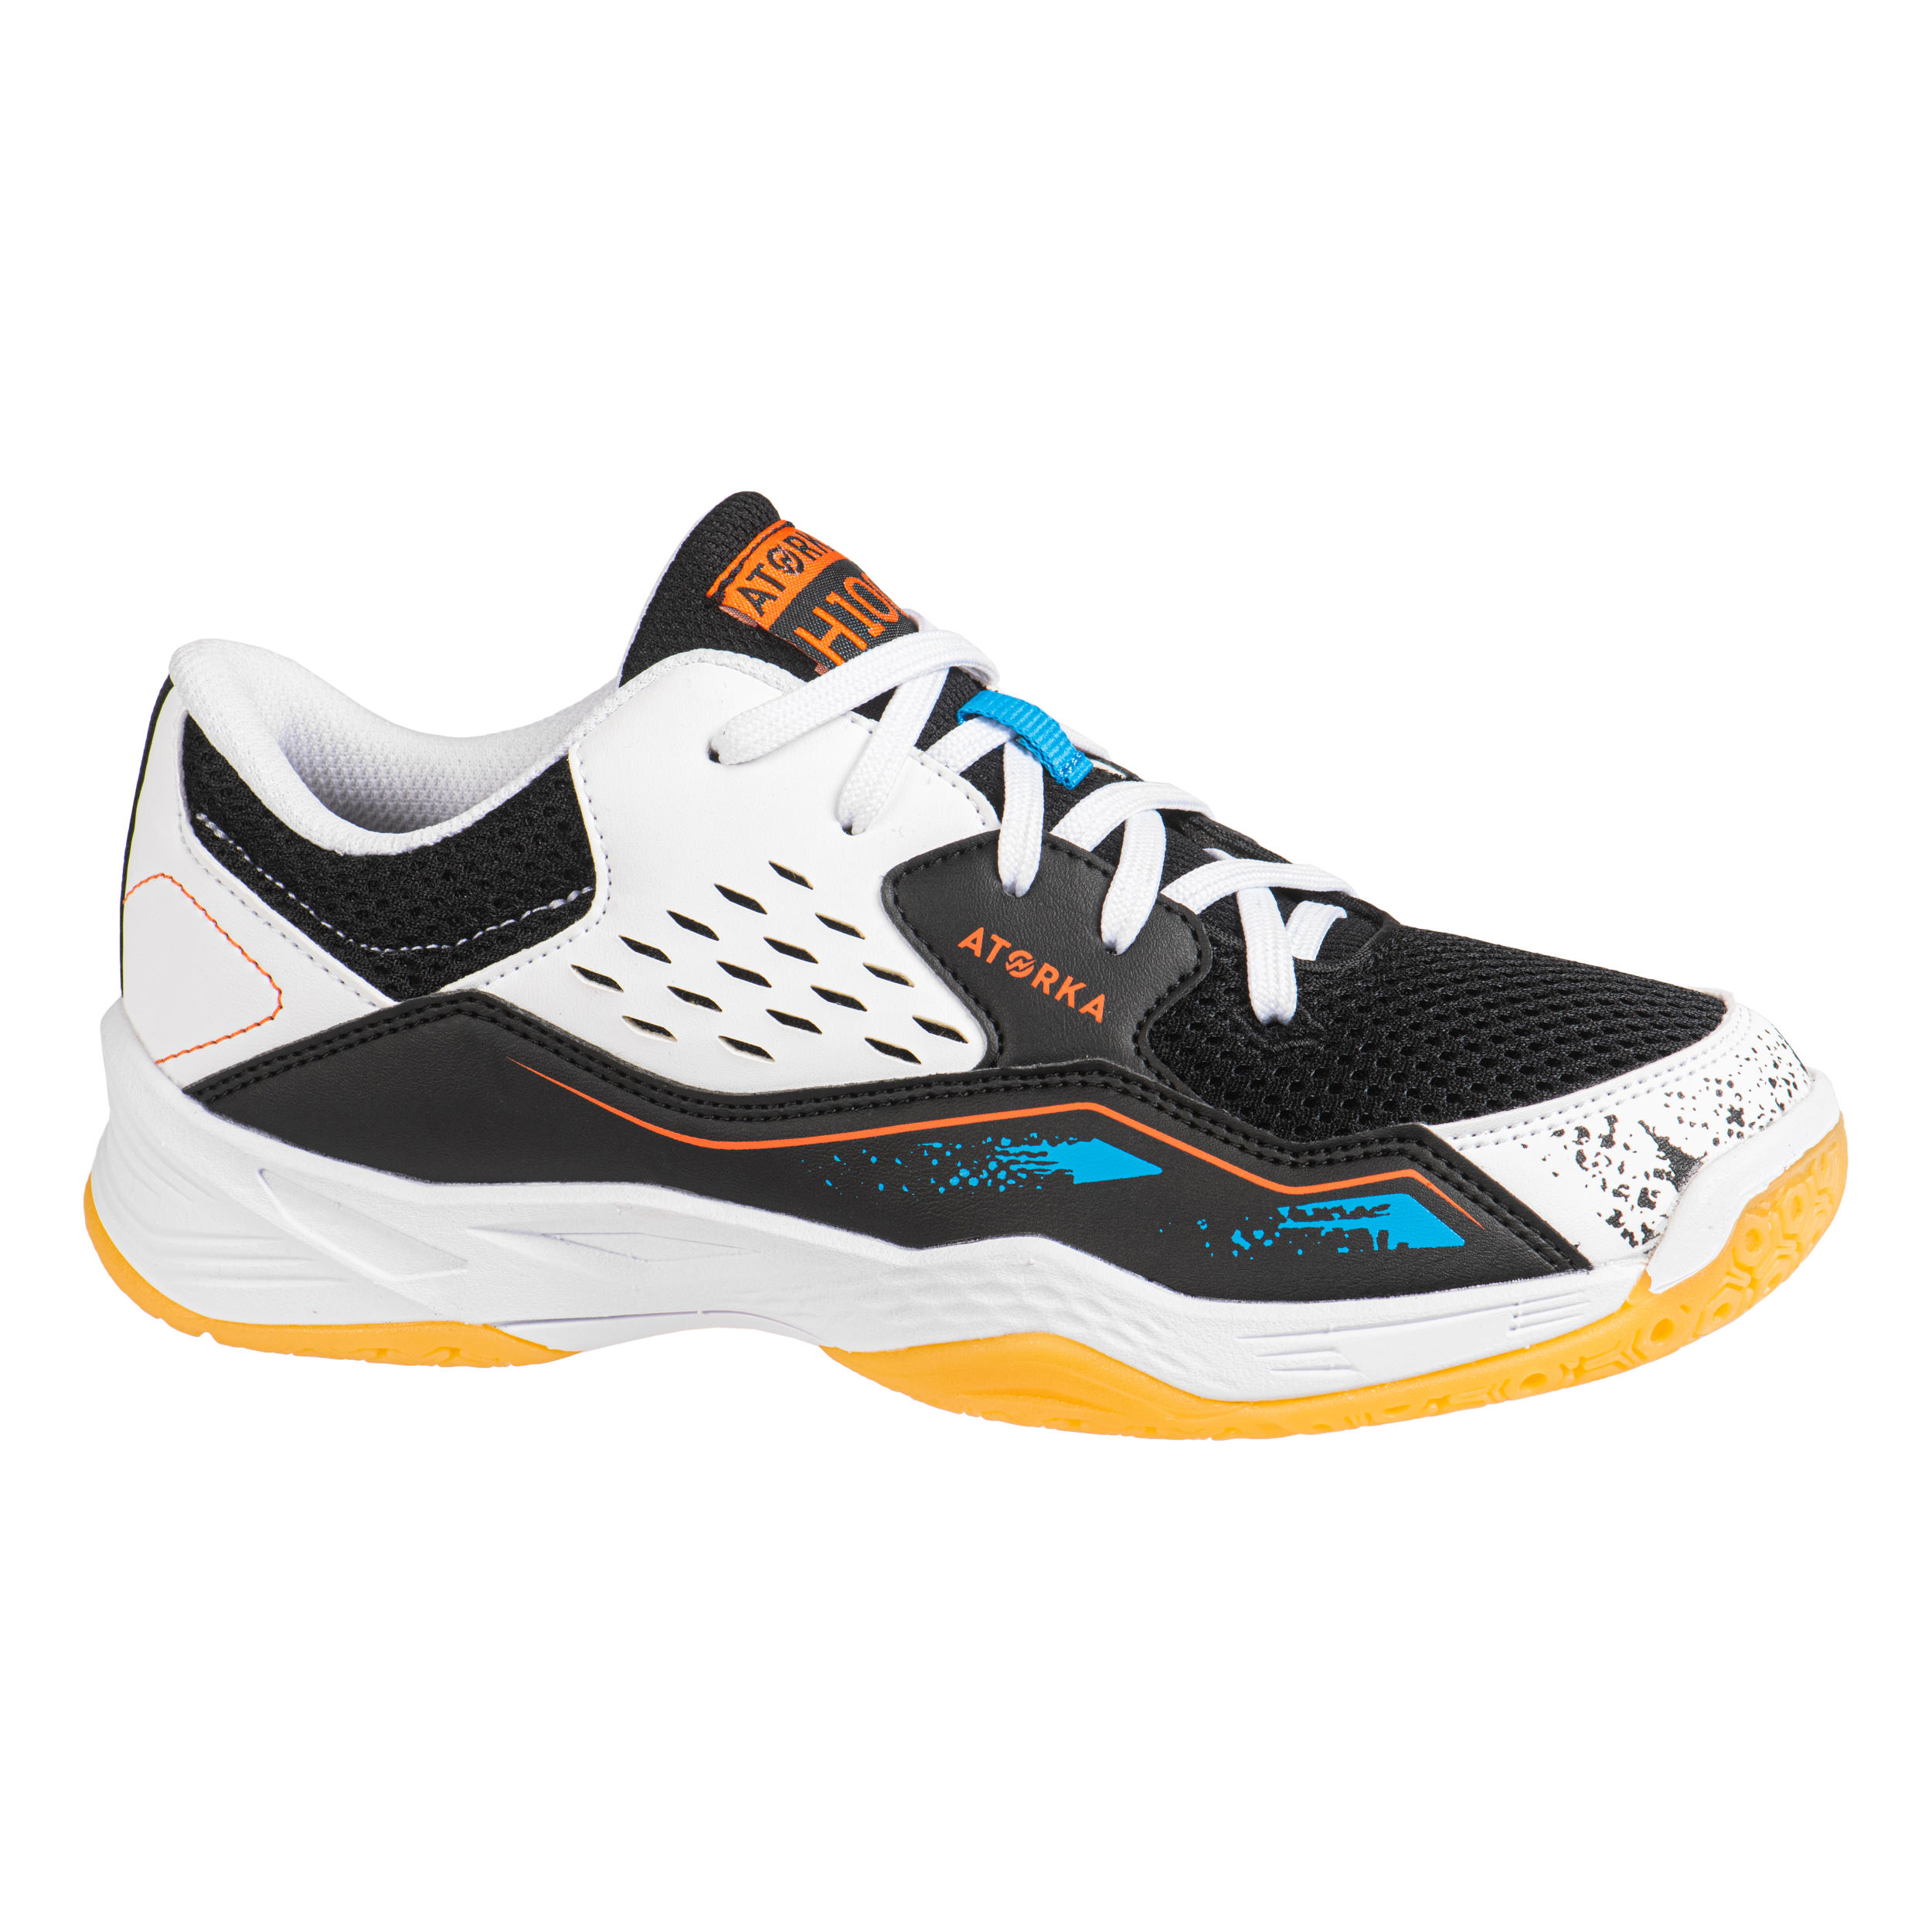 ATORKA Chaussures de handball enfant H100 avec lacets blanc/noir - ATORKA - 36